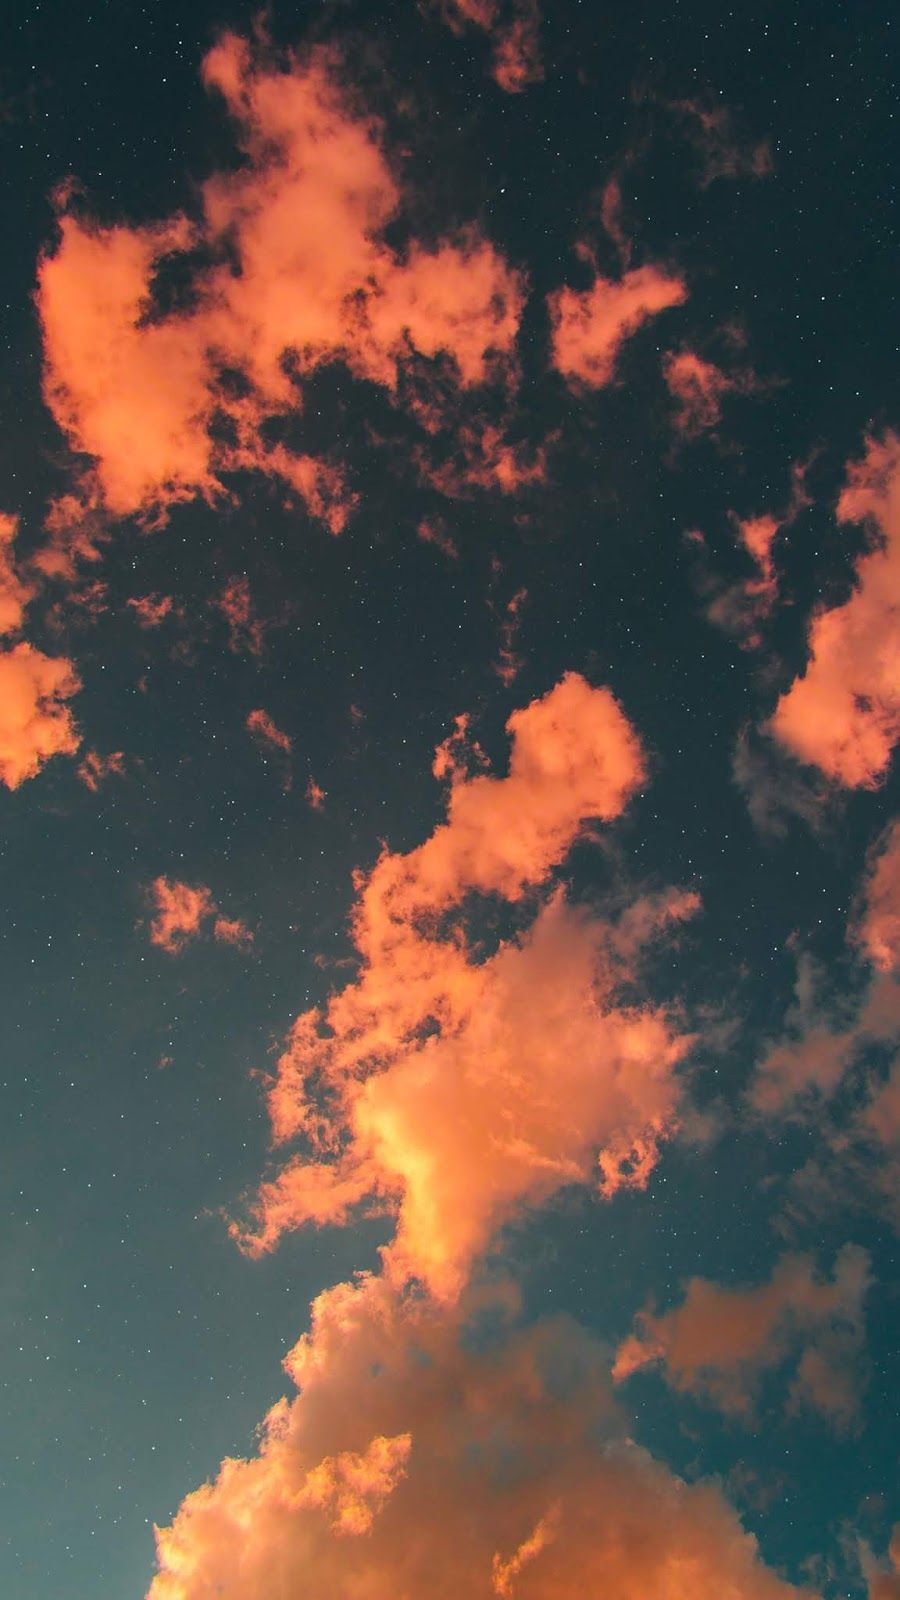  Leuchtend Hintergrundbild 900x1600. aesthetic night sky #wallpaper #iphone #android #background #followme. Sky aesthetic, Night sky wallpaper, Aesthetic background